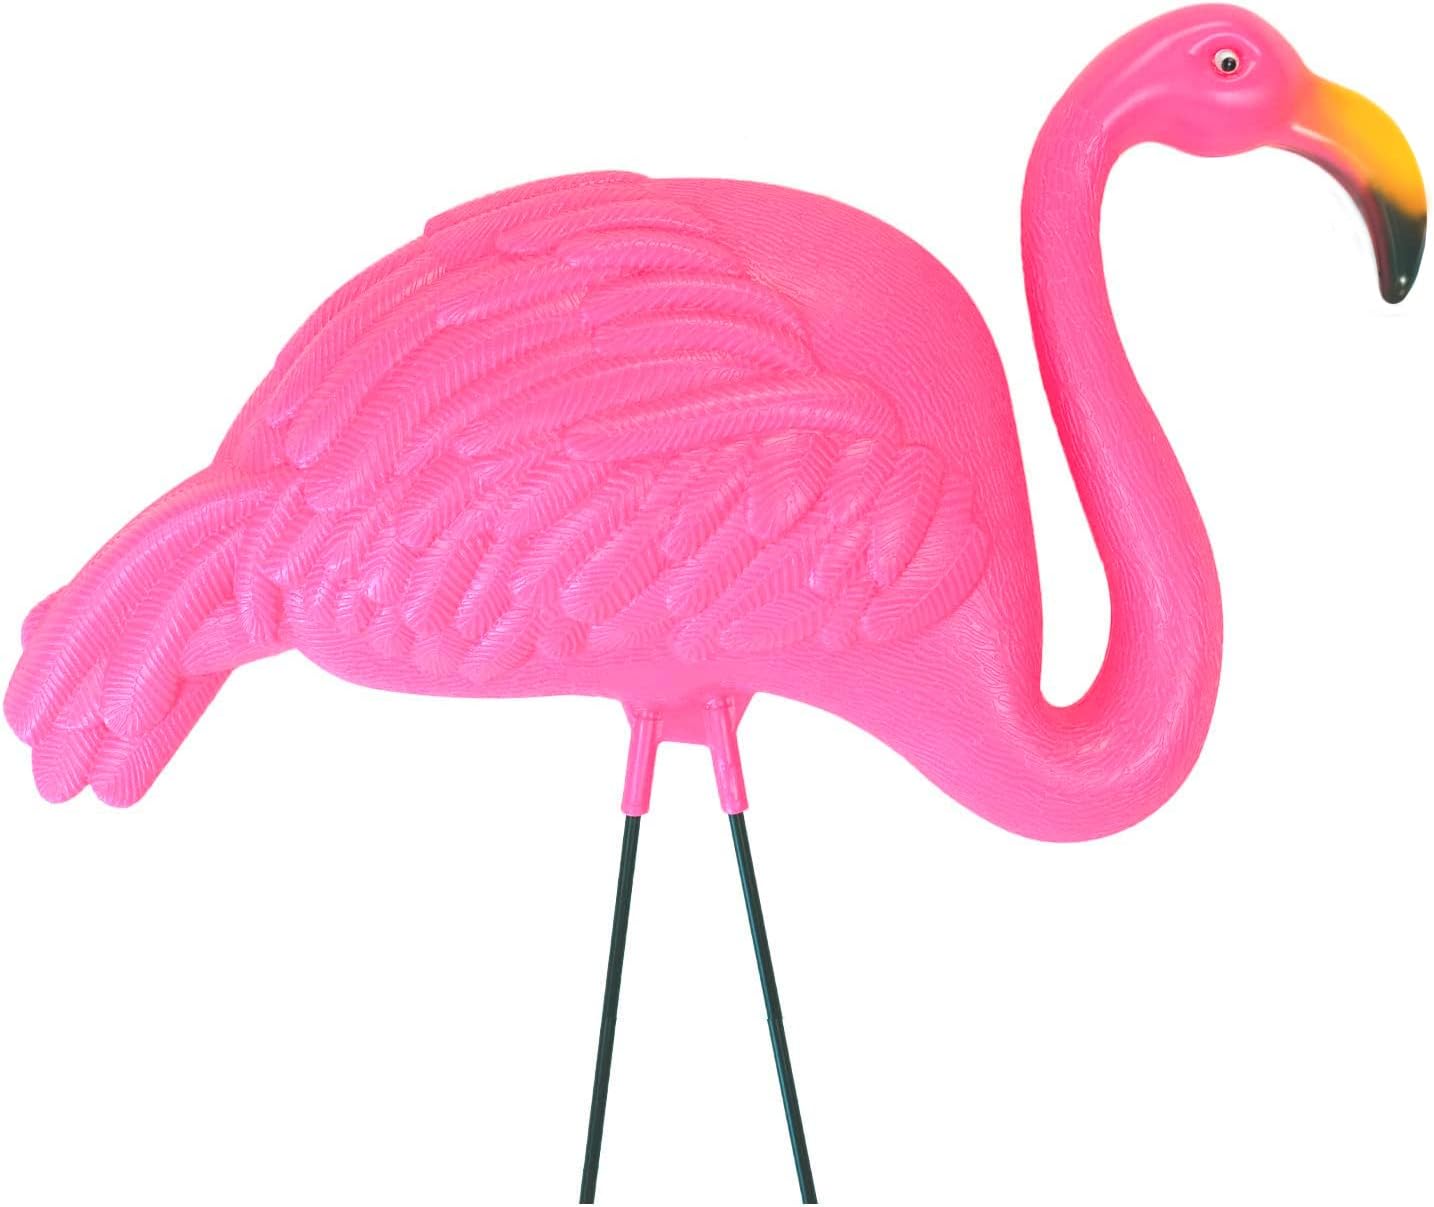 GIFTEXPRESS Large Bright Pink Flamingo Yard Ornament